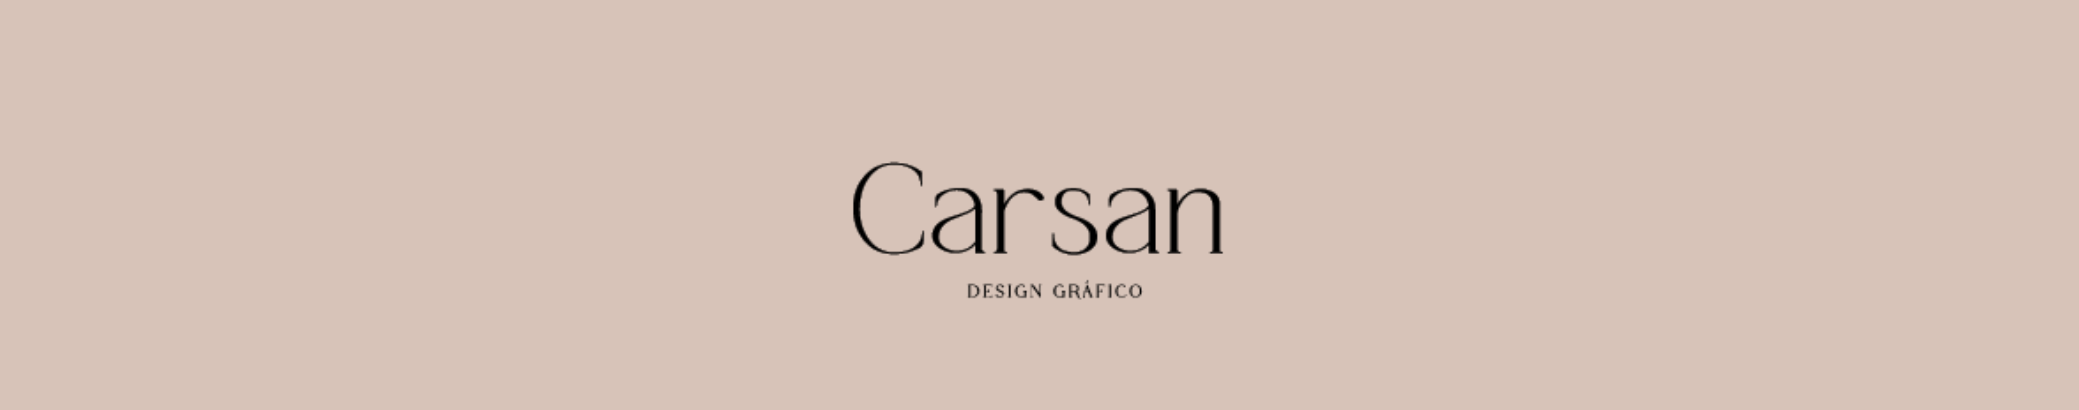 Carsan Design のプロファイルバナー